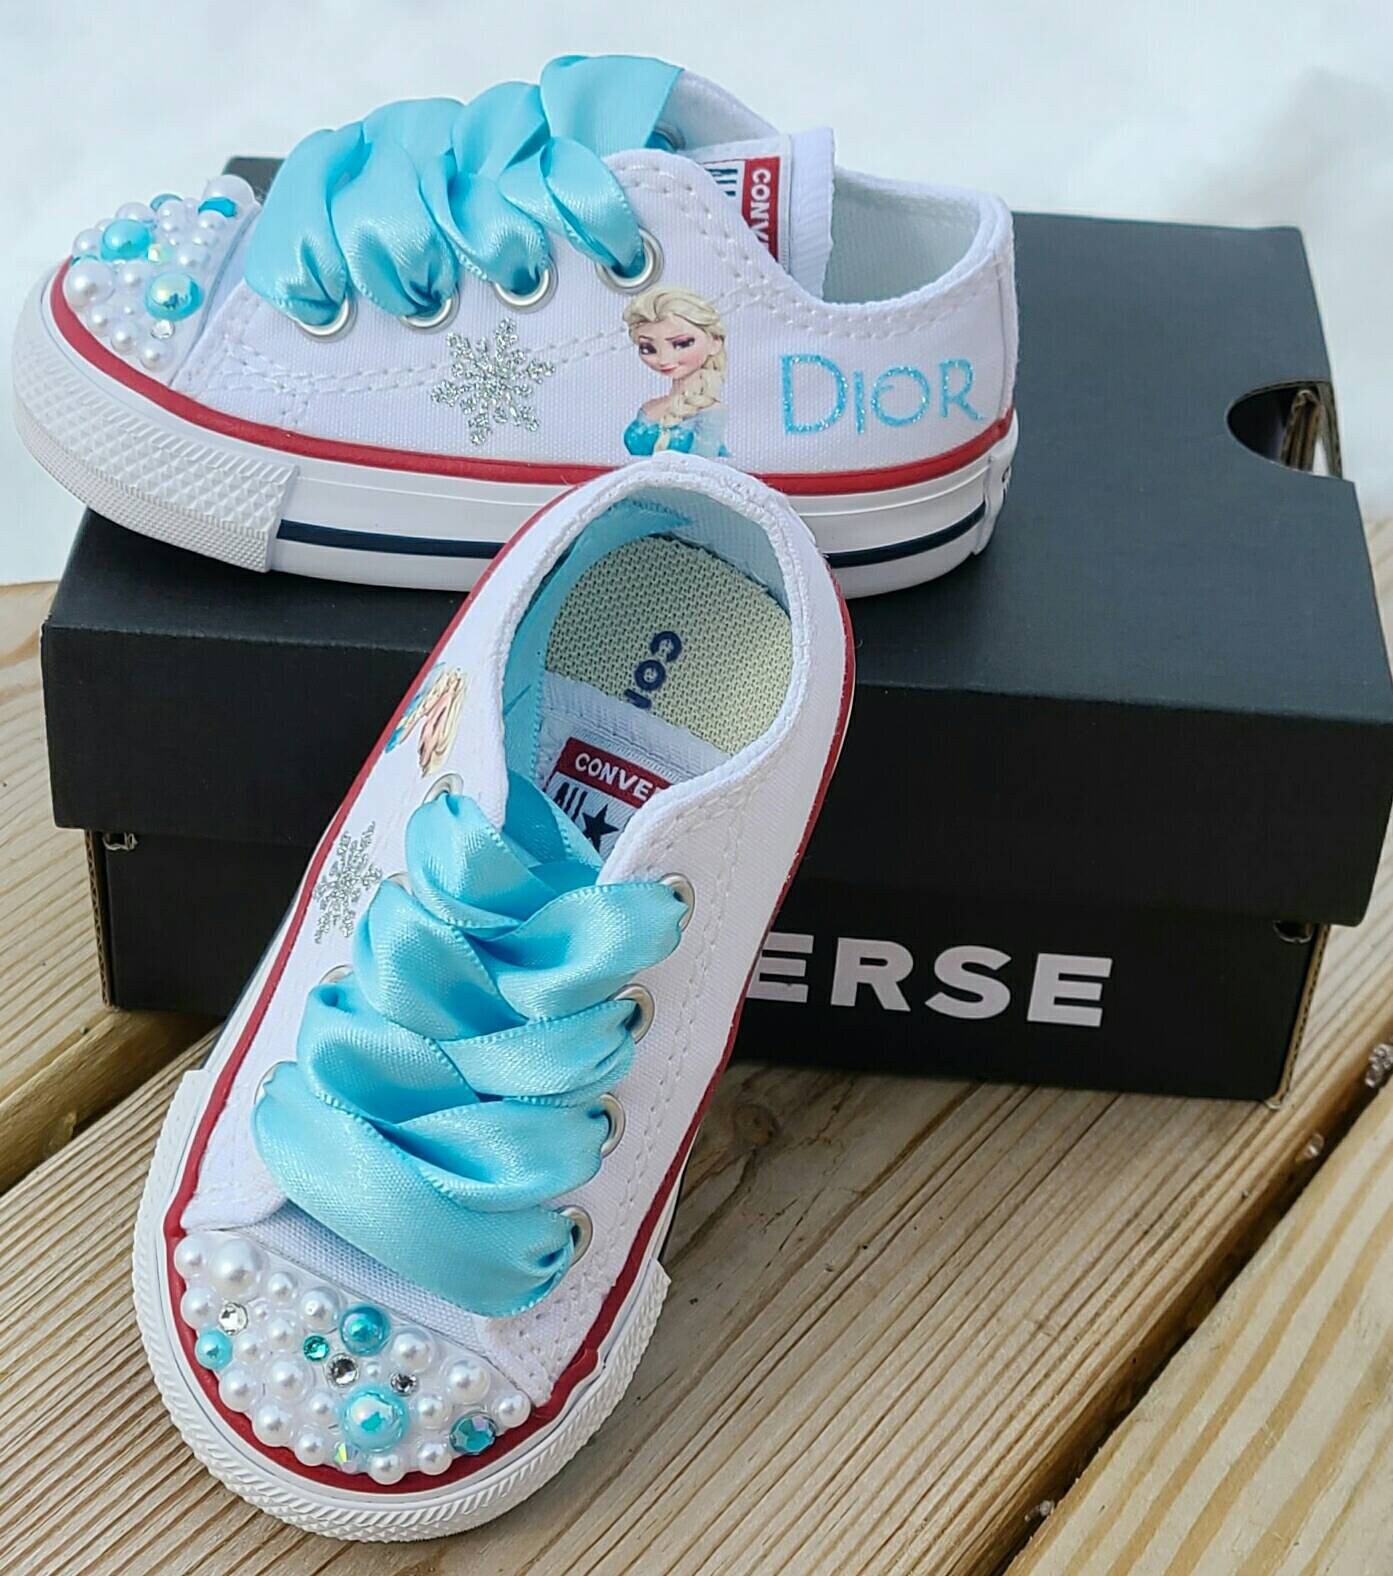 Frozen Elsa Bling Converse, Frozen shoes, Custom Converse, Custom Elsa